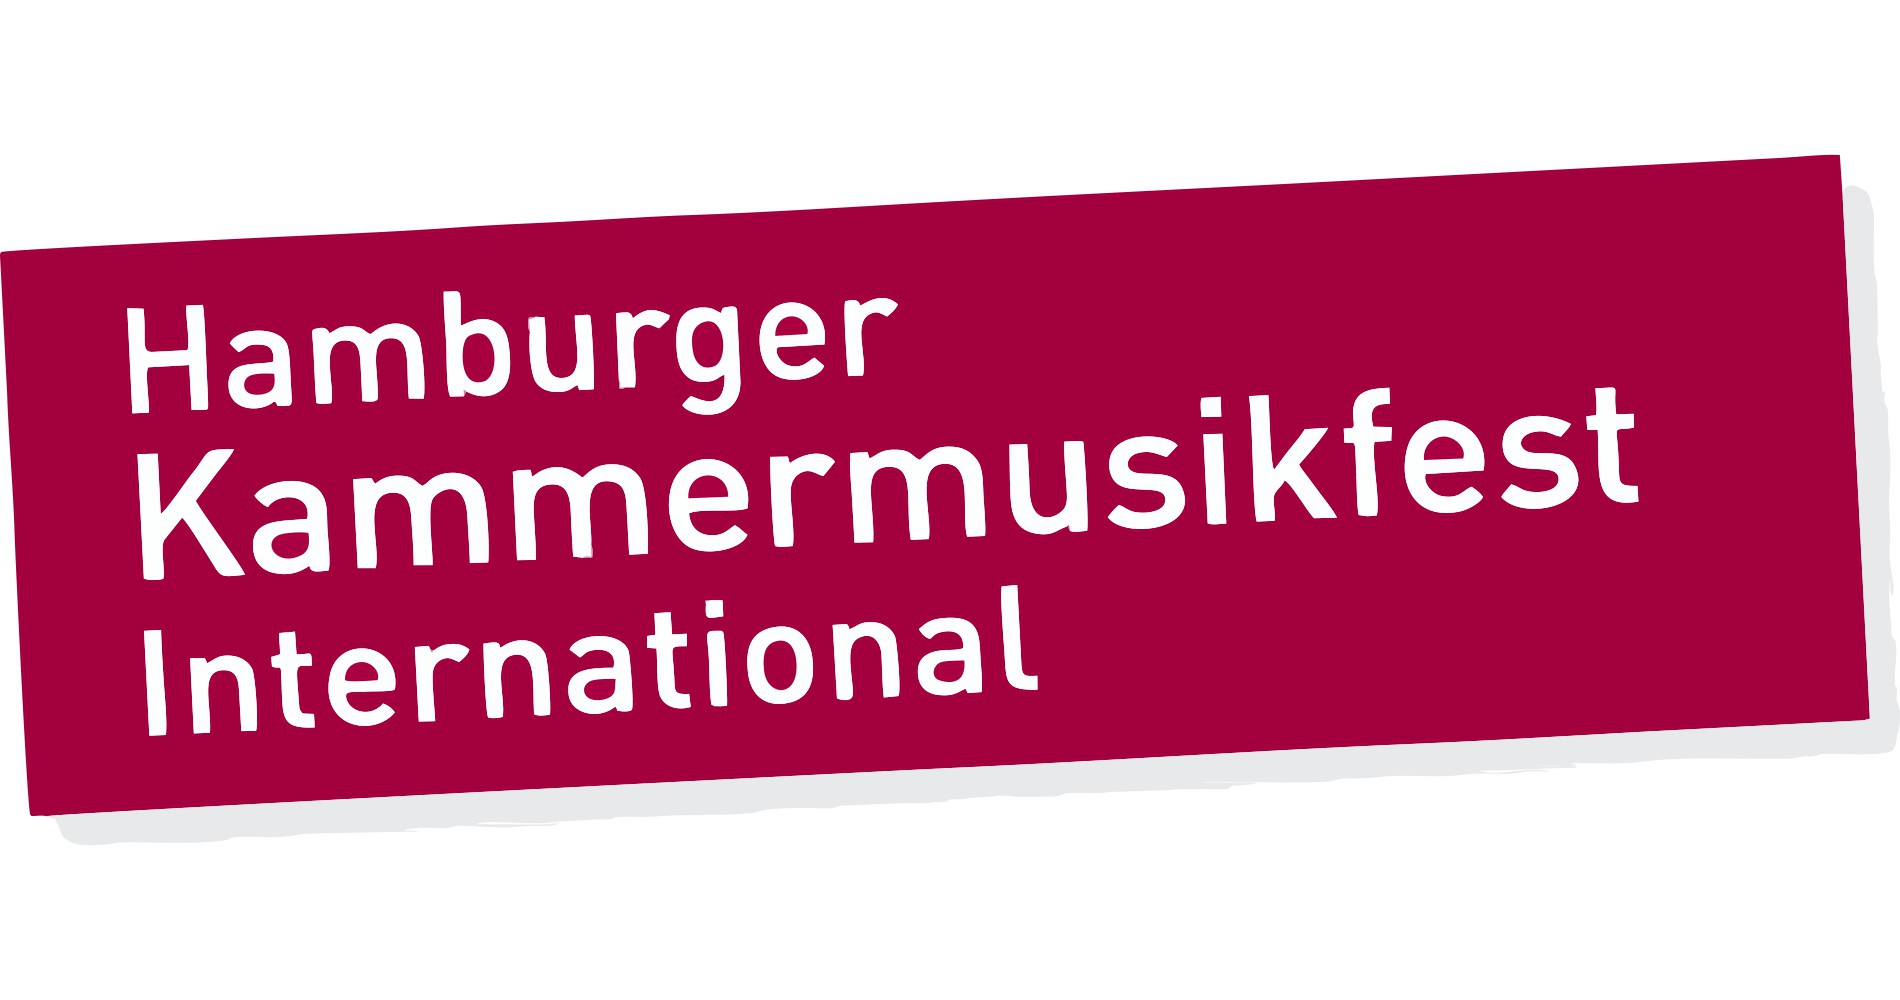 Hamburger Kammermusikfest International | Hans-Kauffmann-Stiftung loading=